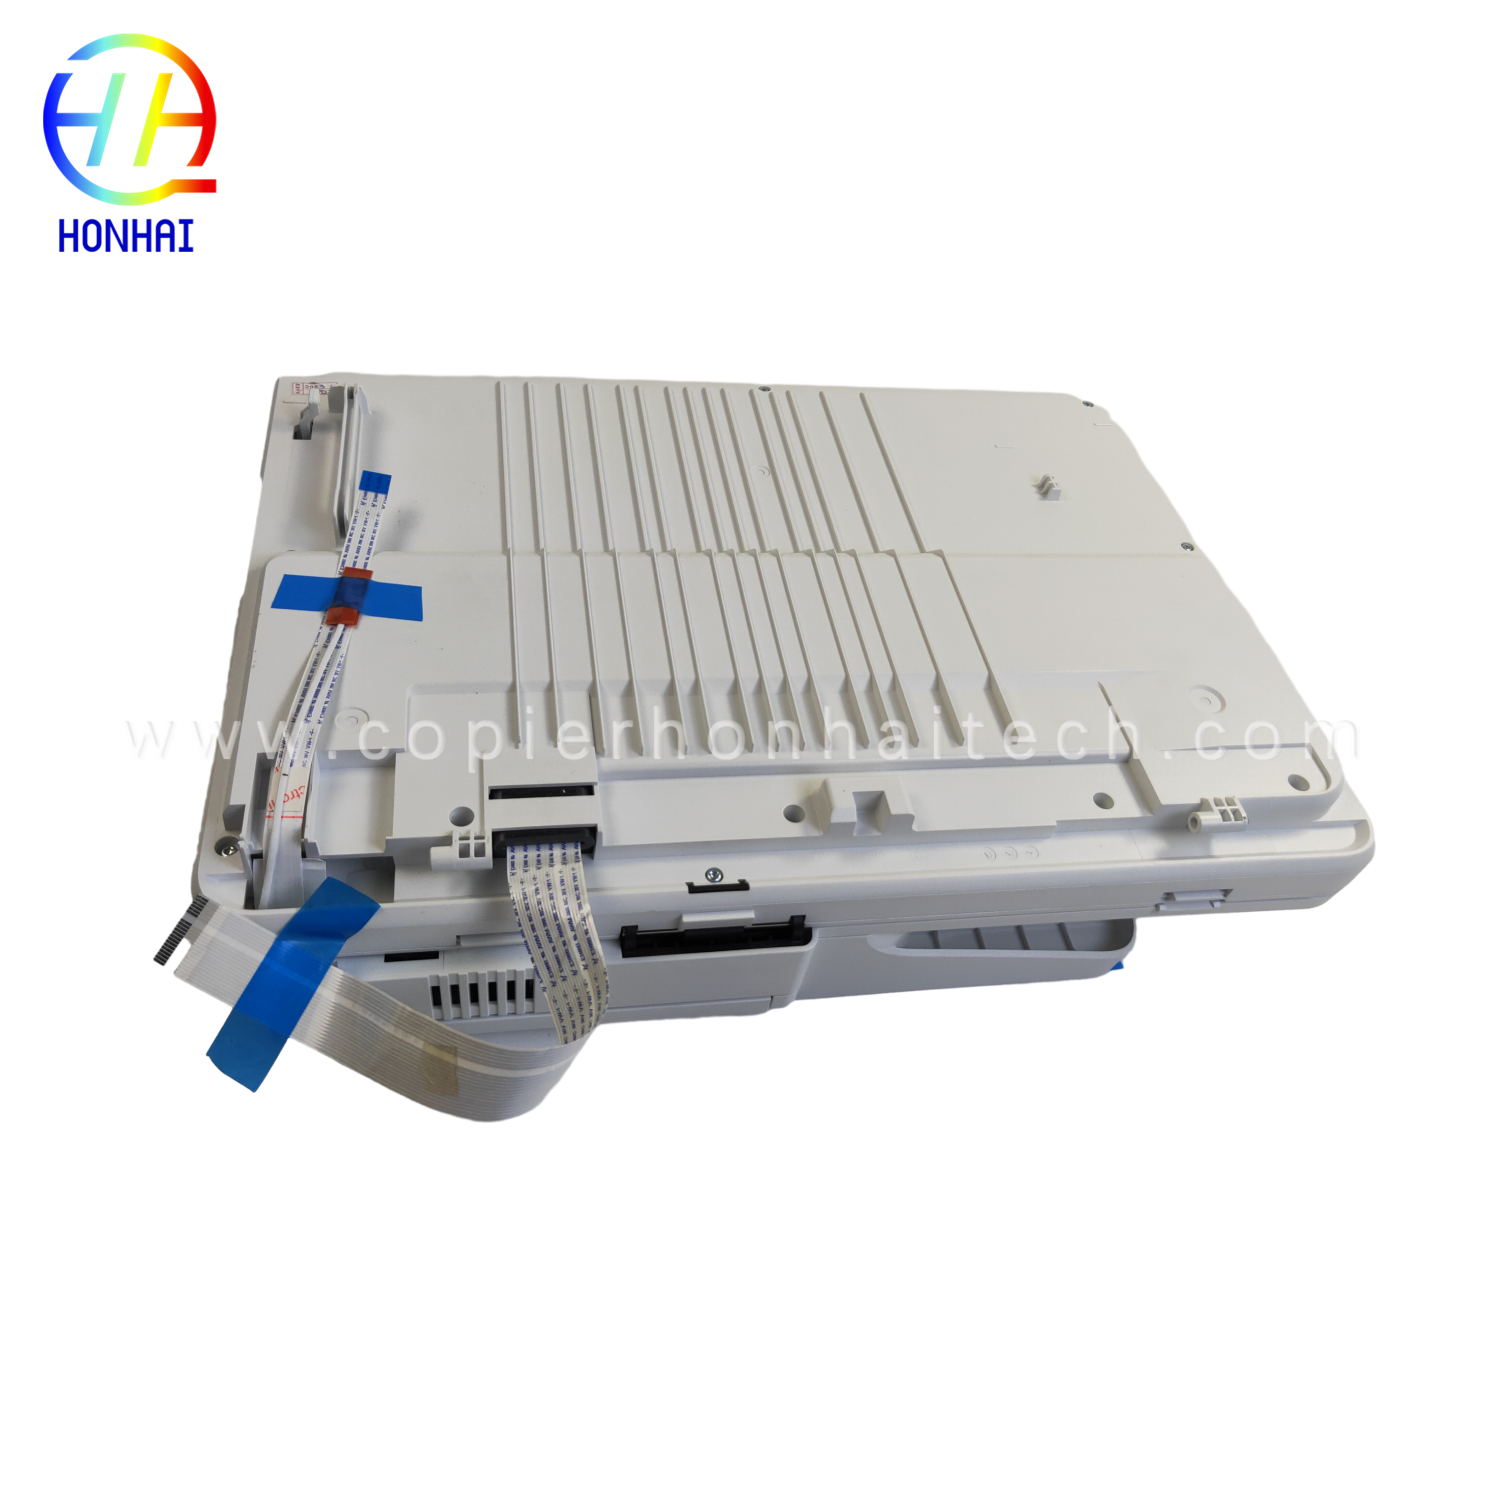 https://www.copierhonhaitech.com/original-printer-adfflat-for-hp-color-laserjet-m277-product/